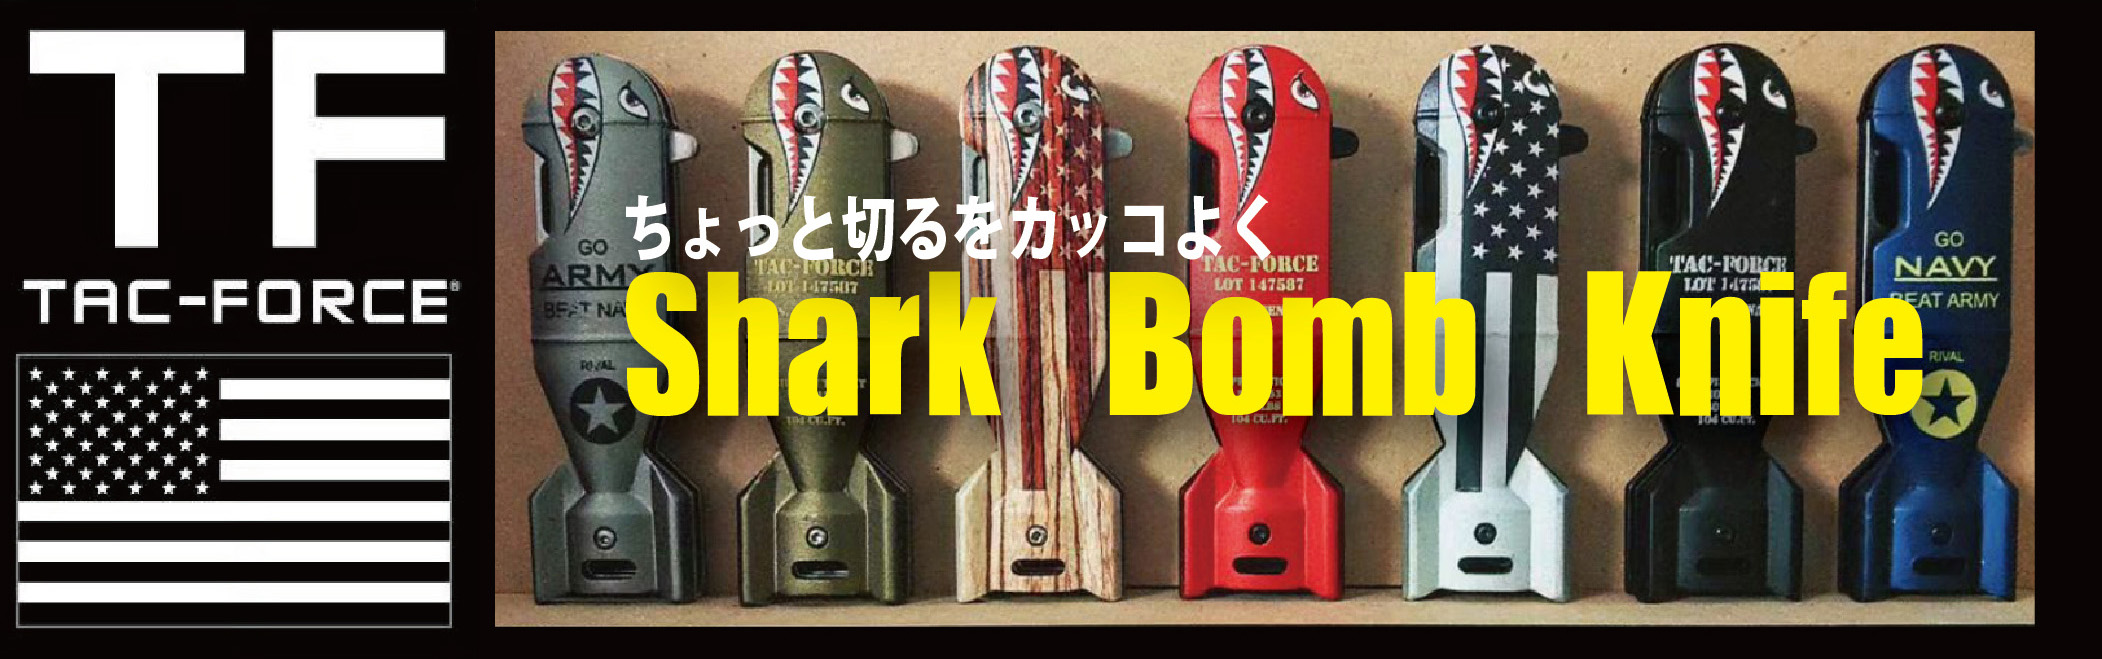 SHARK BOMB KNIFE!!